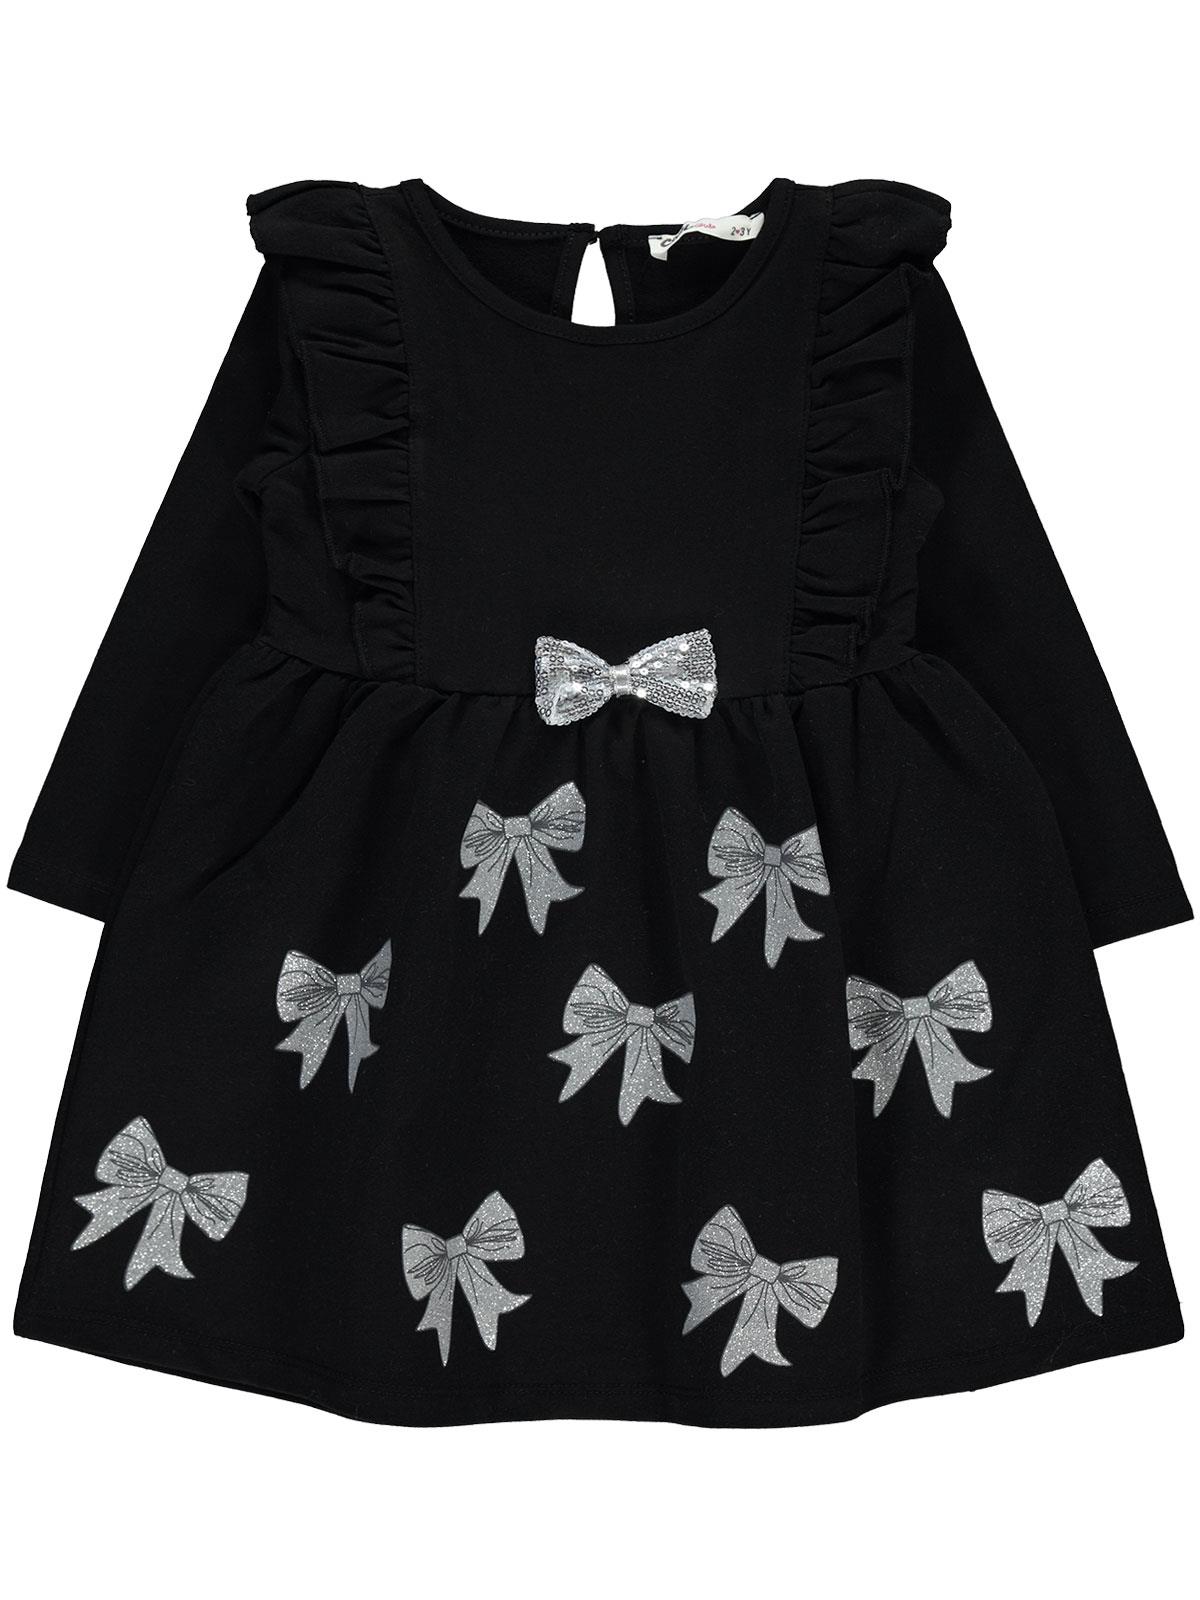 Cvl Kız Çocuk Elbise 2-5 Yaş Siyah